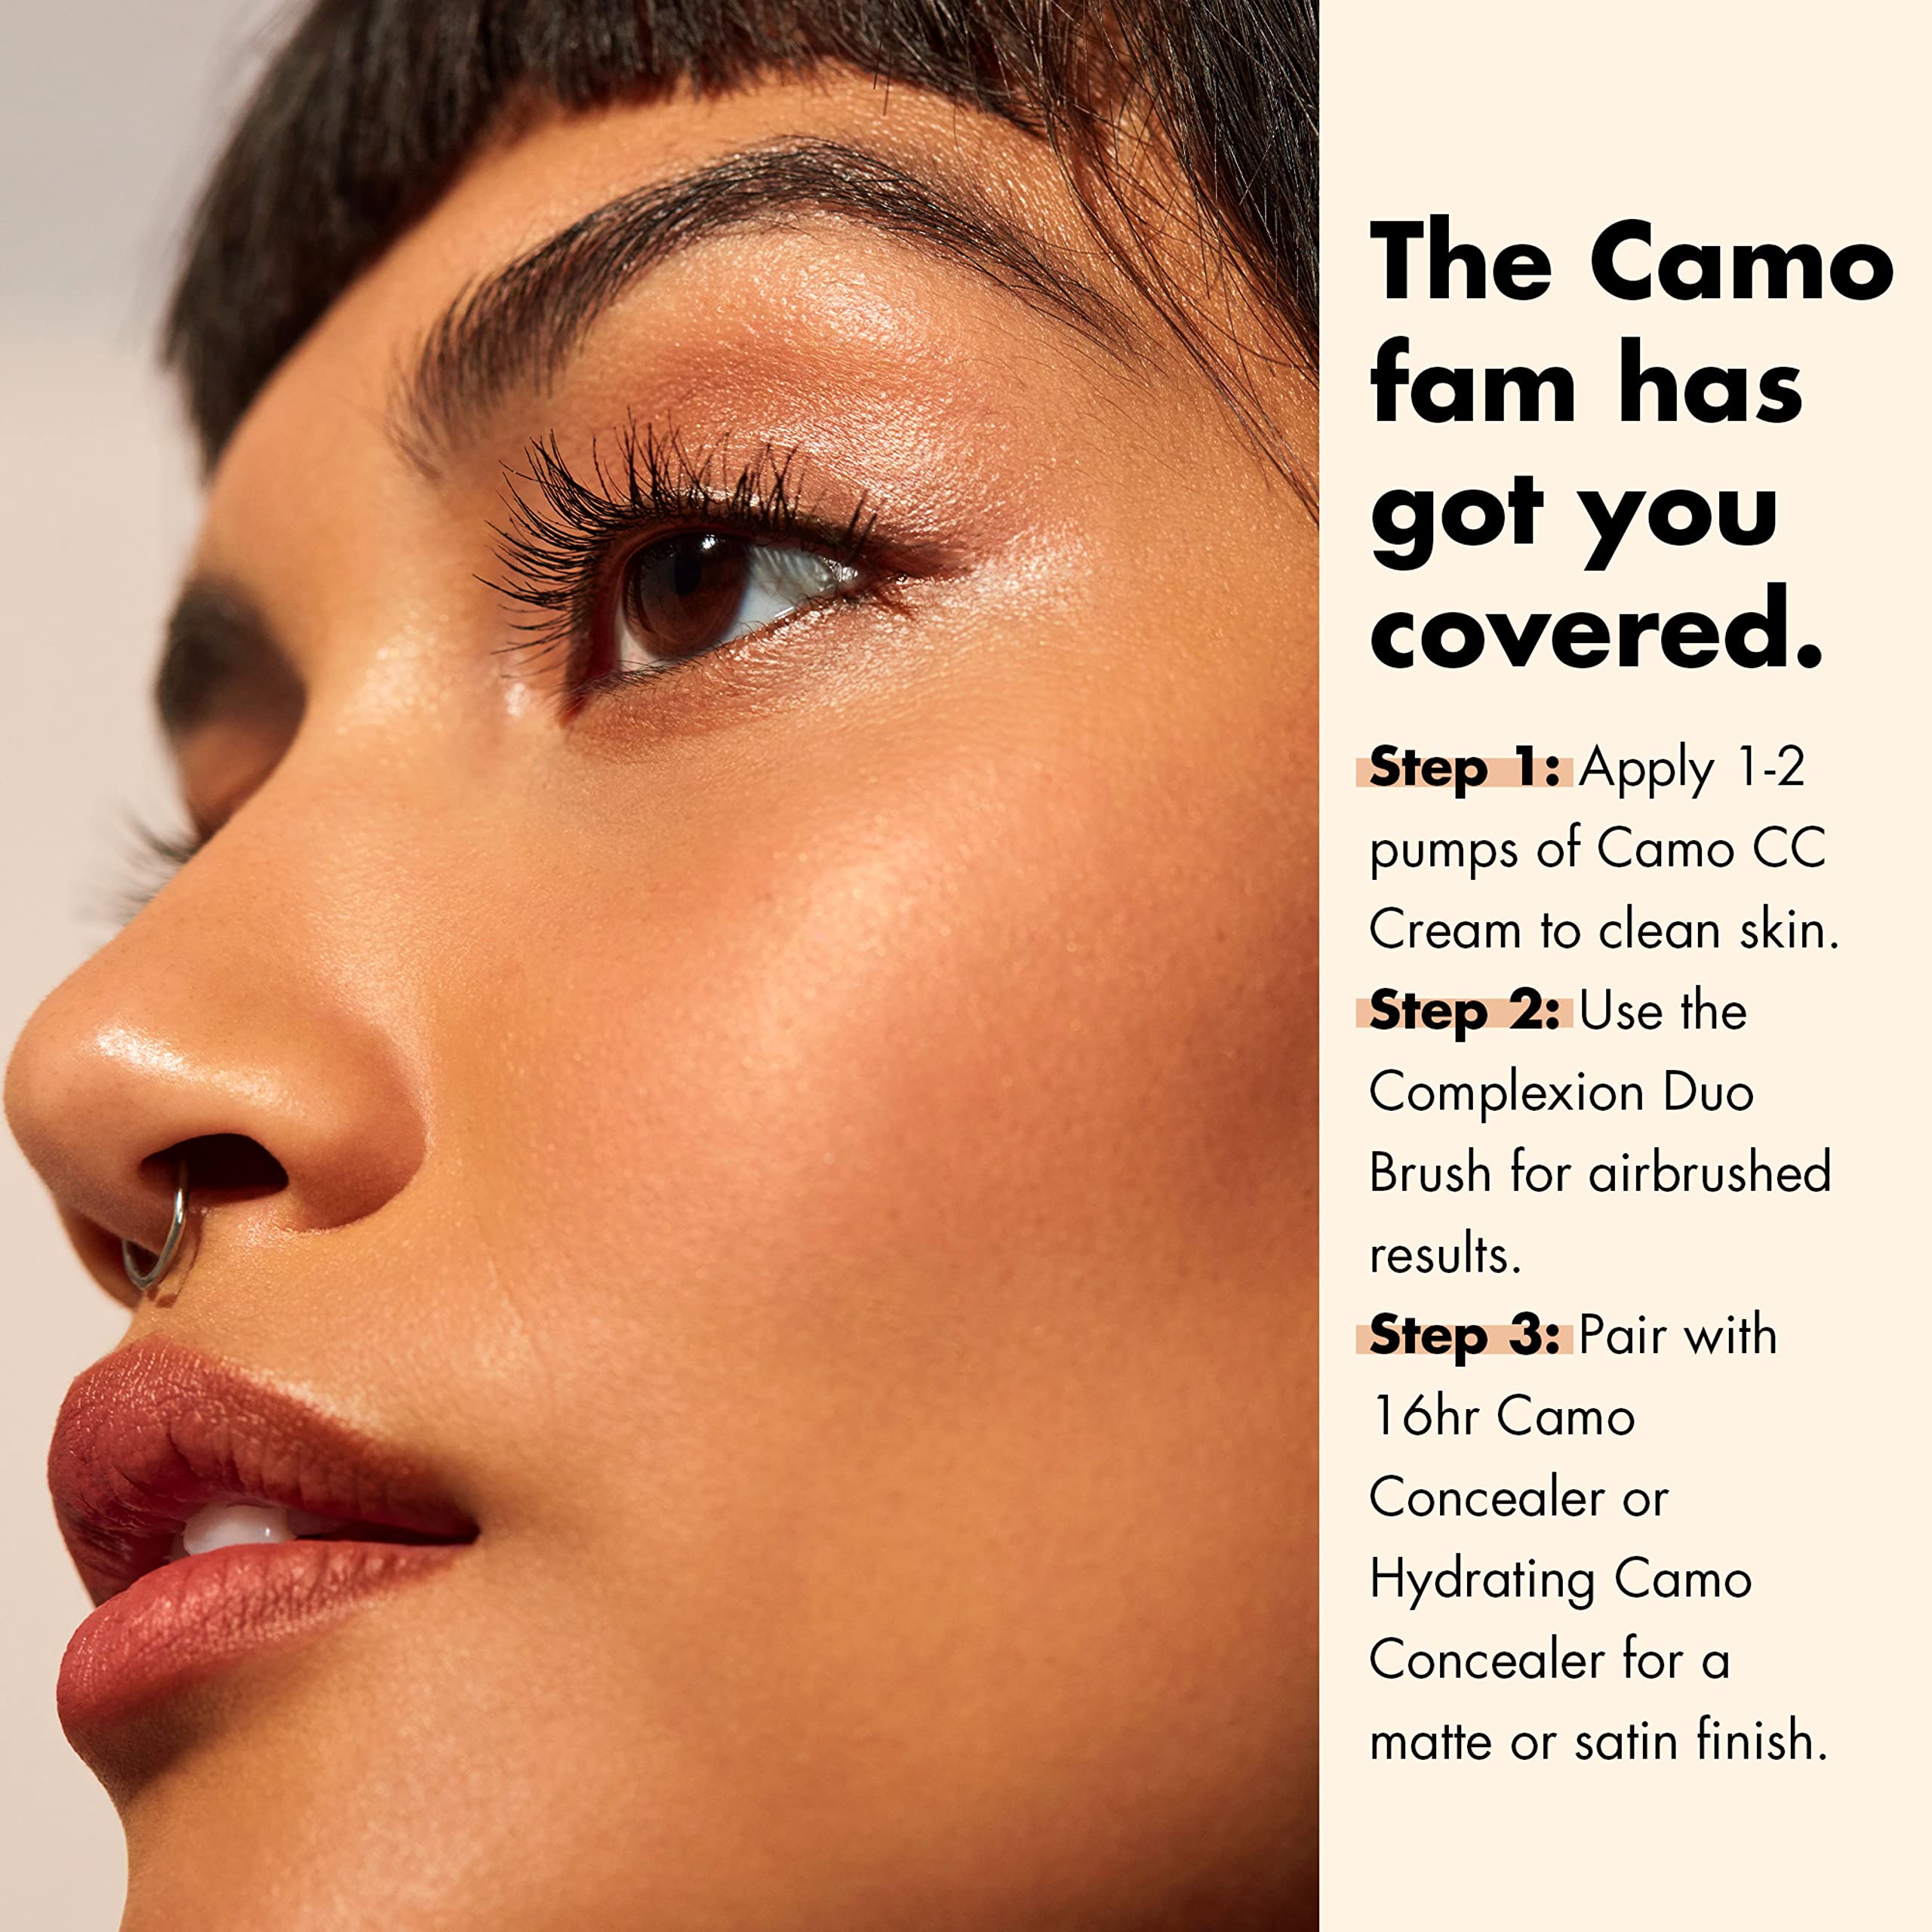 e.l.f. Camo CC Cream, Color Correcting Medium-To-Full Coverage Foundation with SPF 30, Medium 330 W, 1.05 Oz (30g)